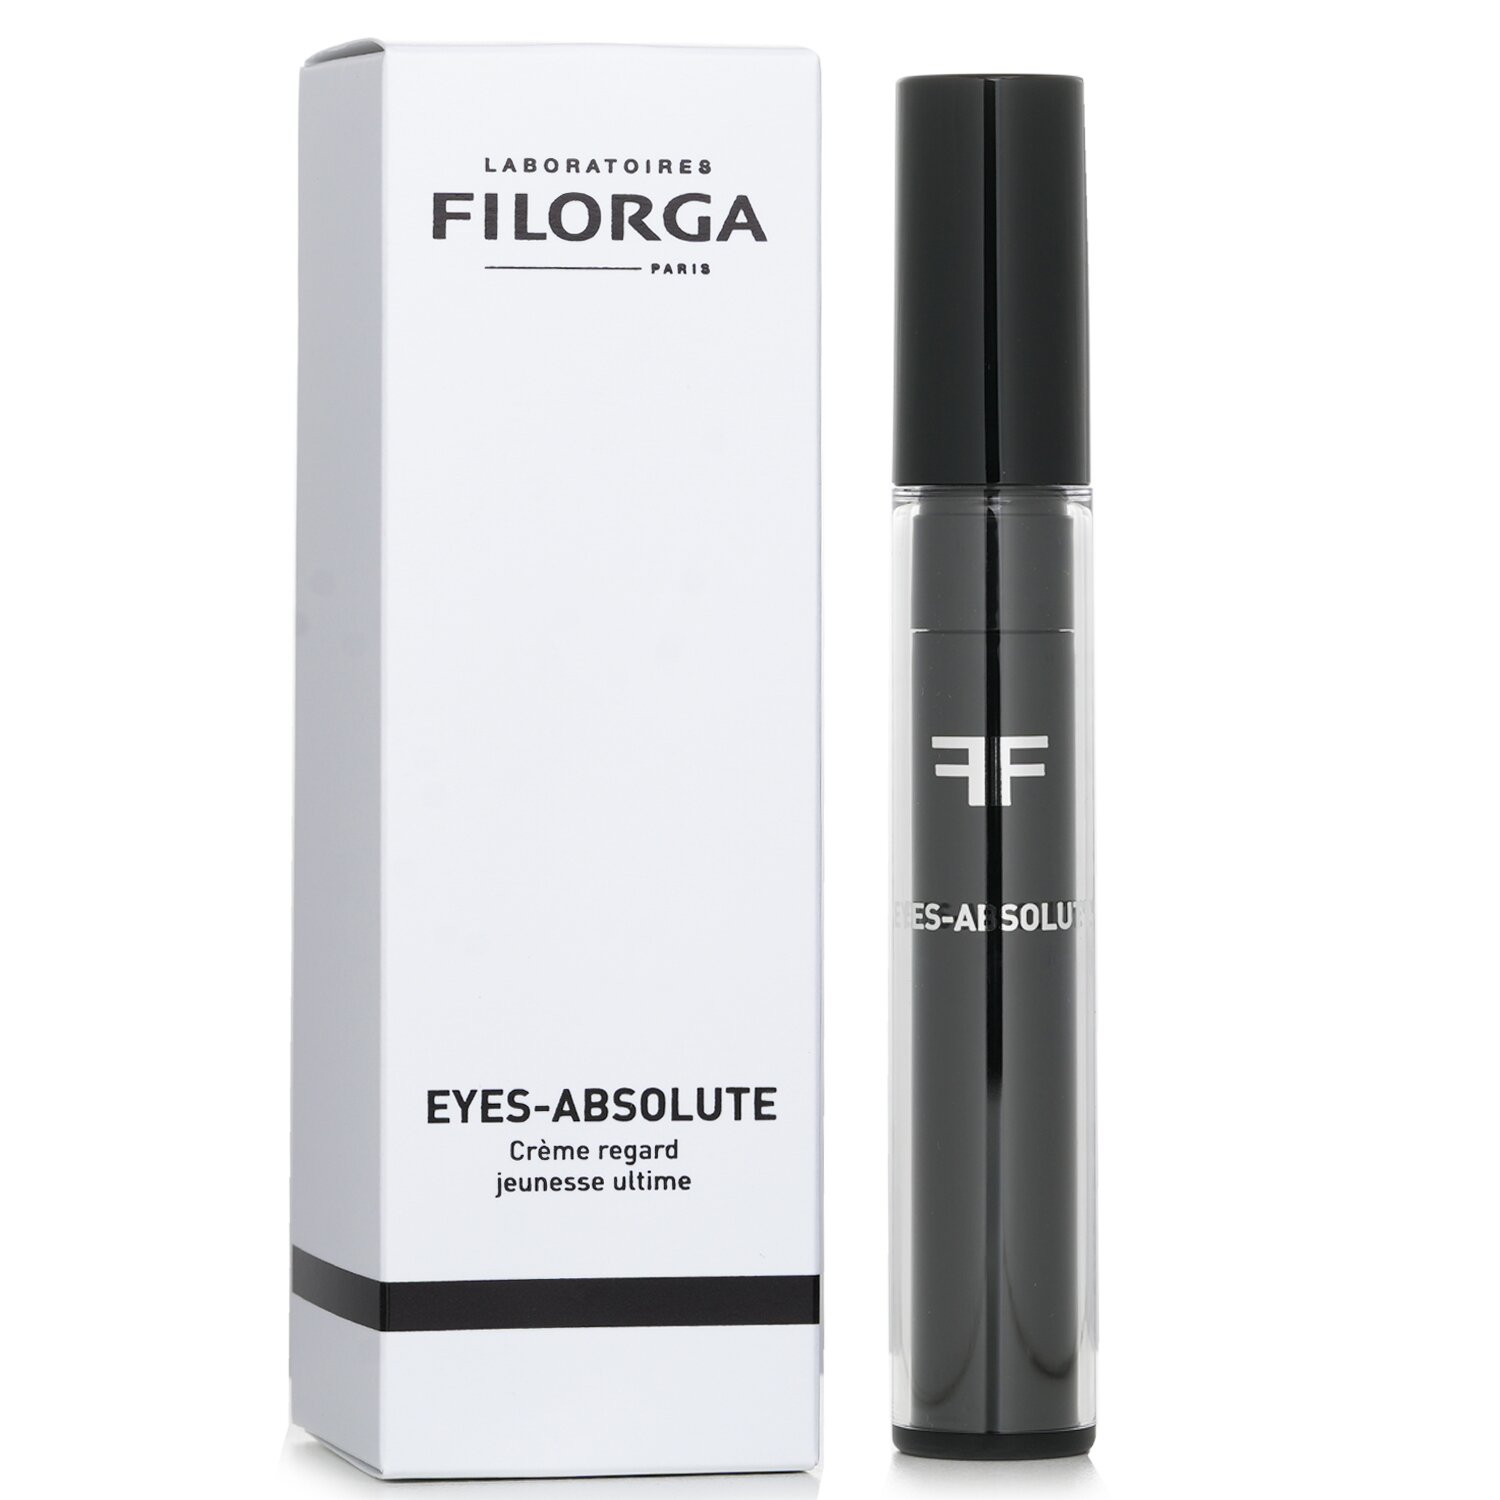 Filorga Eyes-Absolute Ultimate Anti-Aging oční krém 15ml/0.5oz